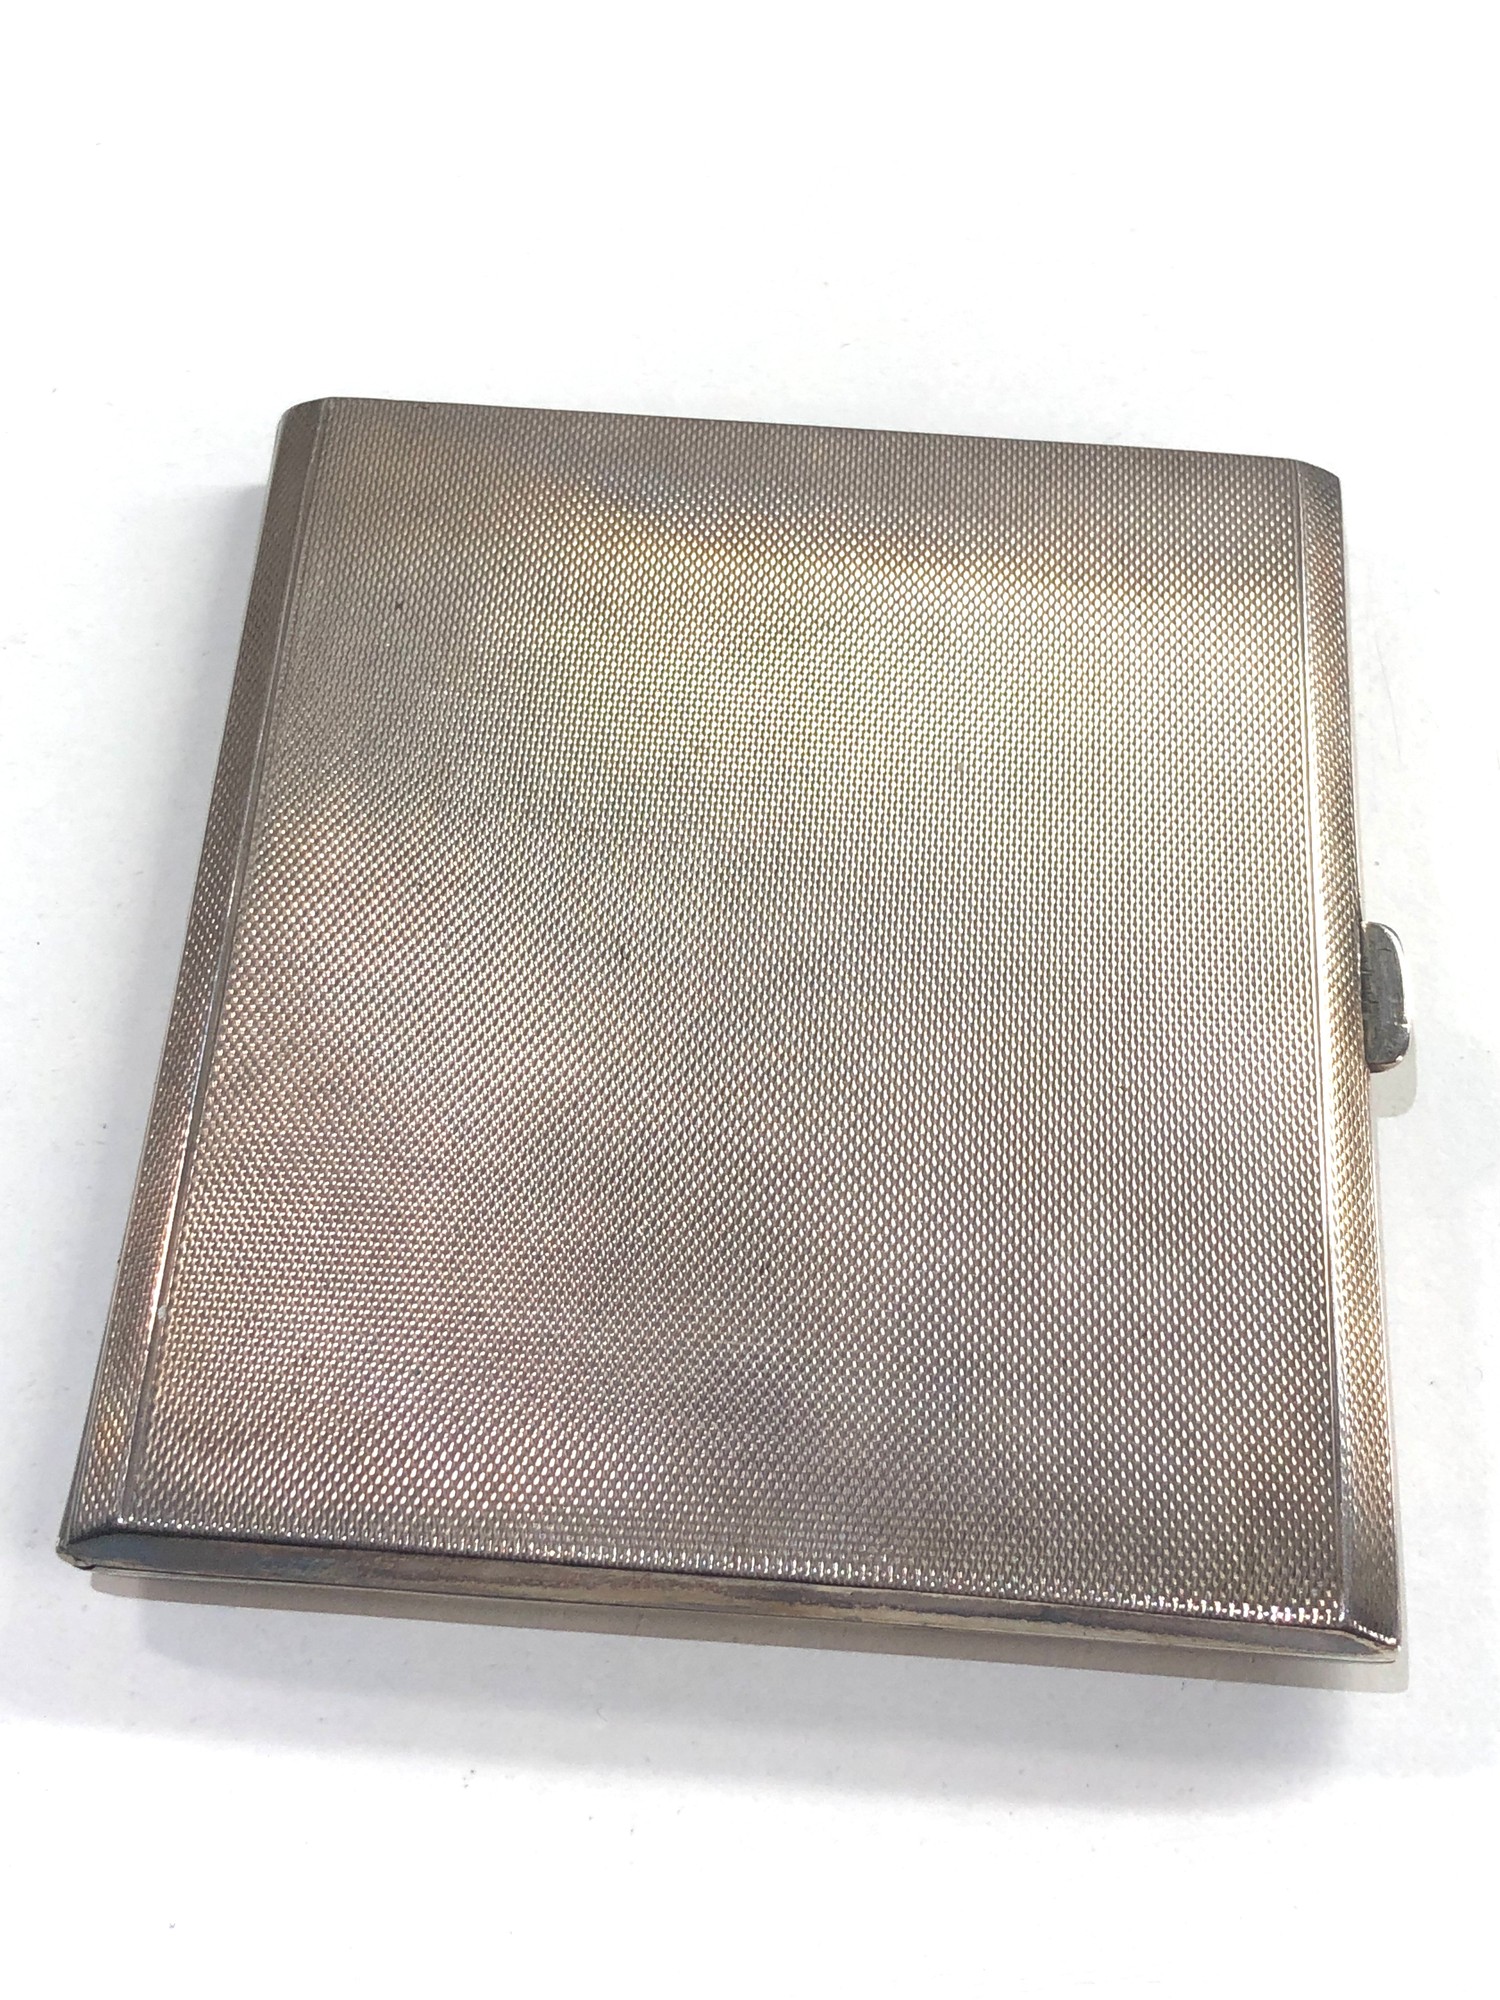 Vintage engine turned cigarette case Birmingham silver hallmarks weight 132g - Image 3 of 4